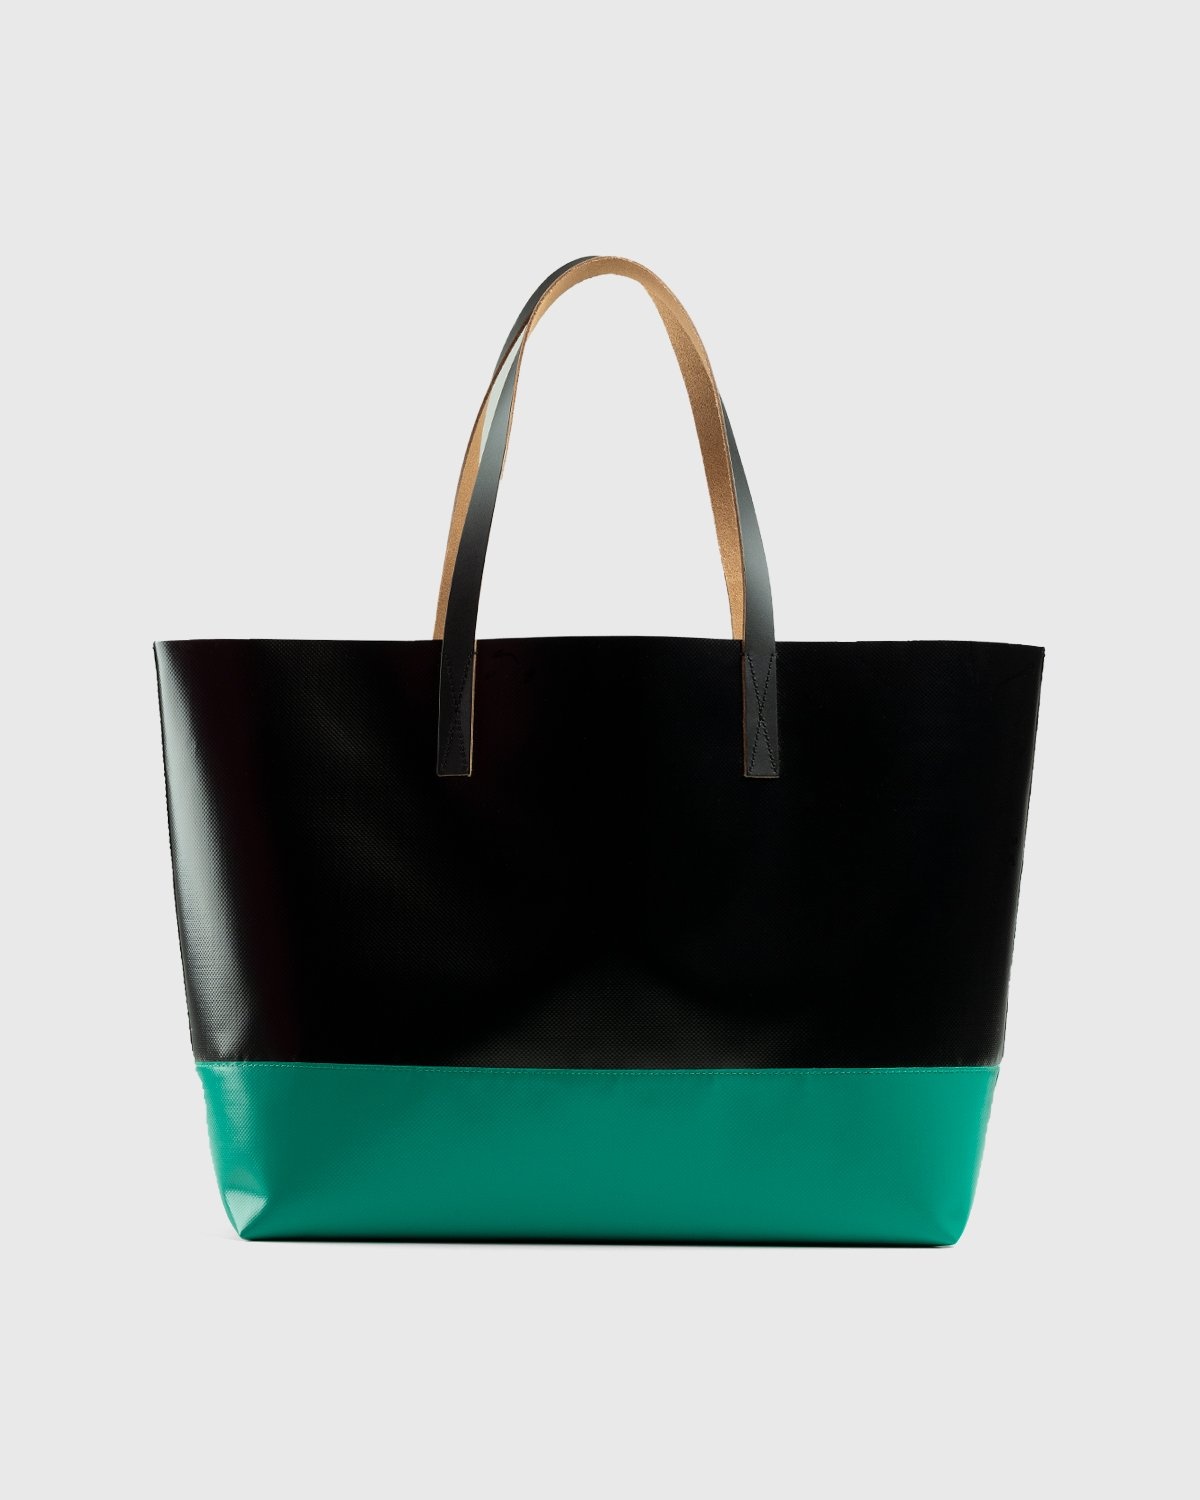 Marni – Tribeca Two-Tone Tote Bag Black/Green - Bags - Black - Image 2